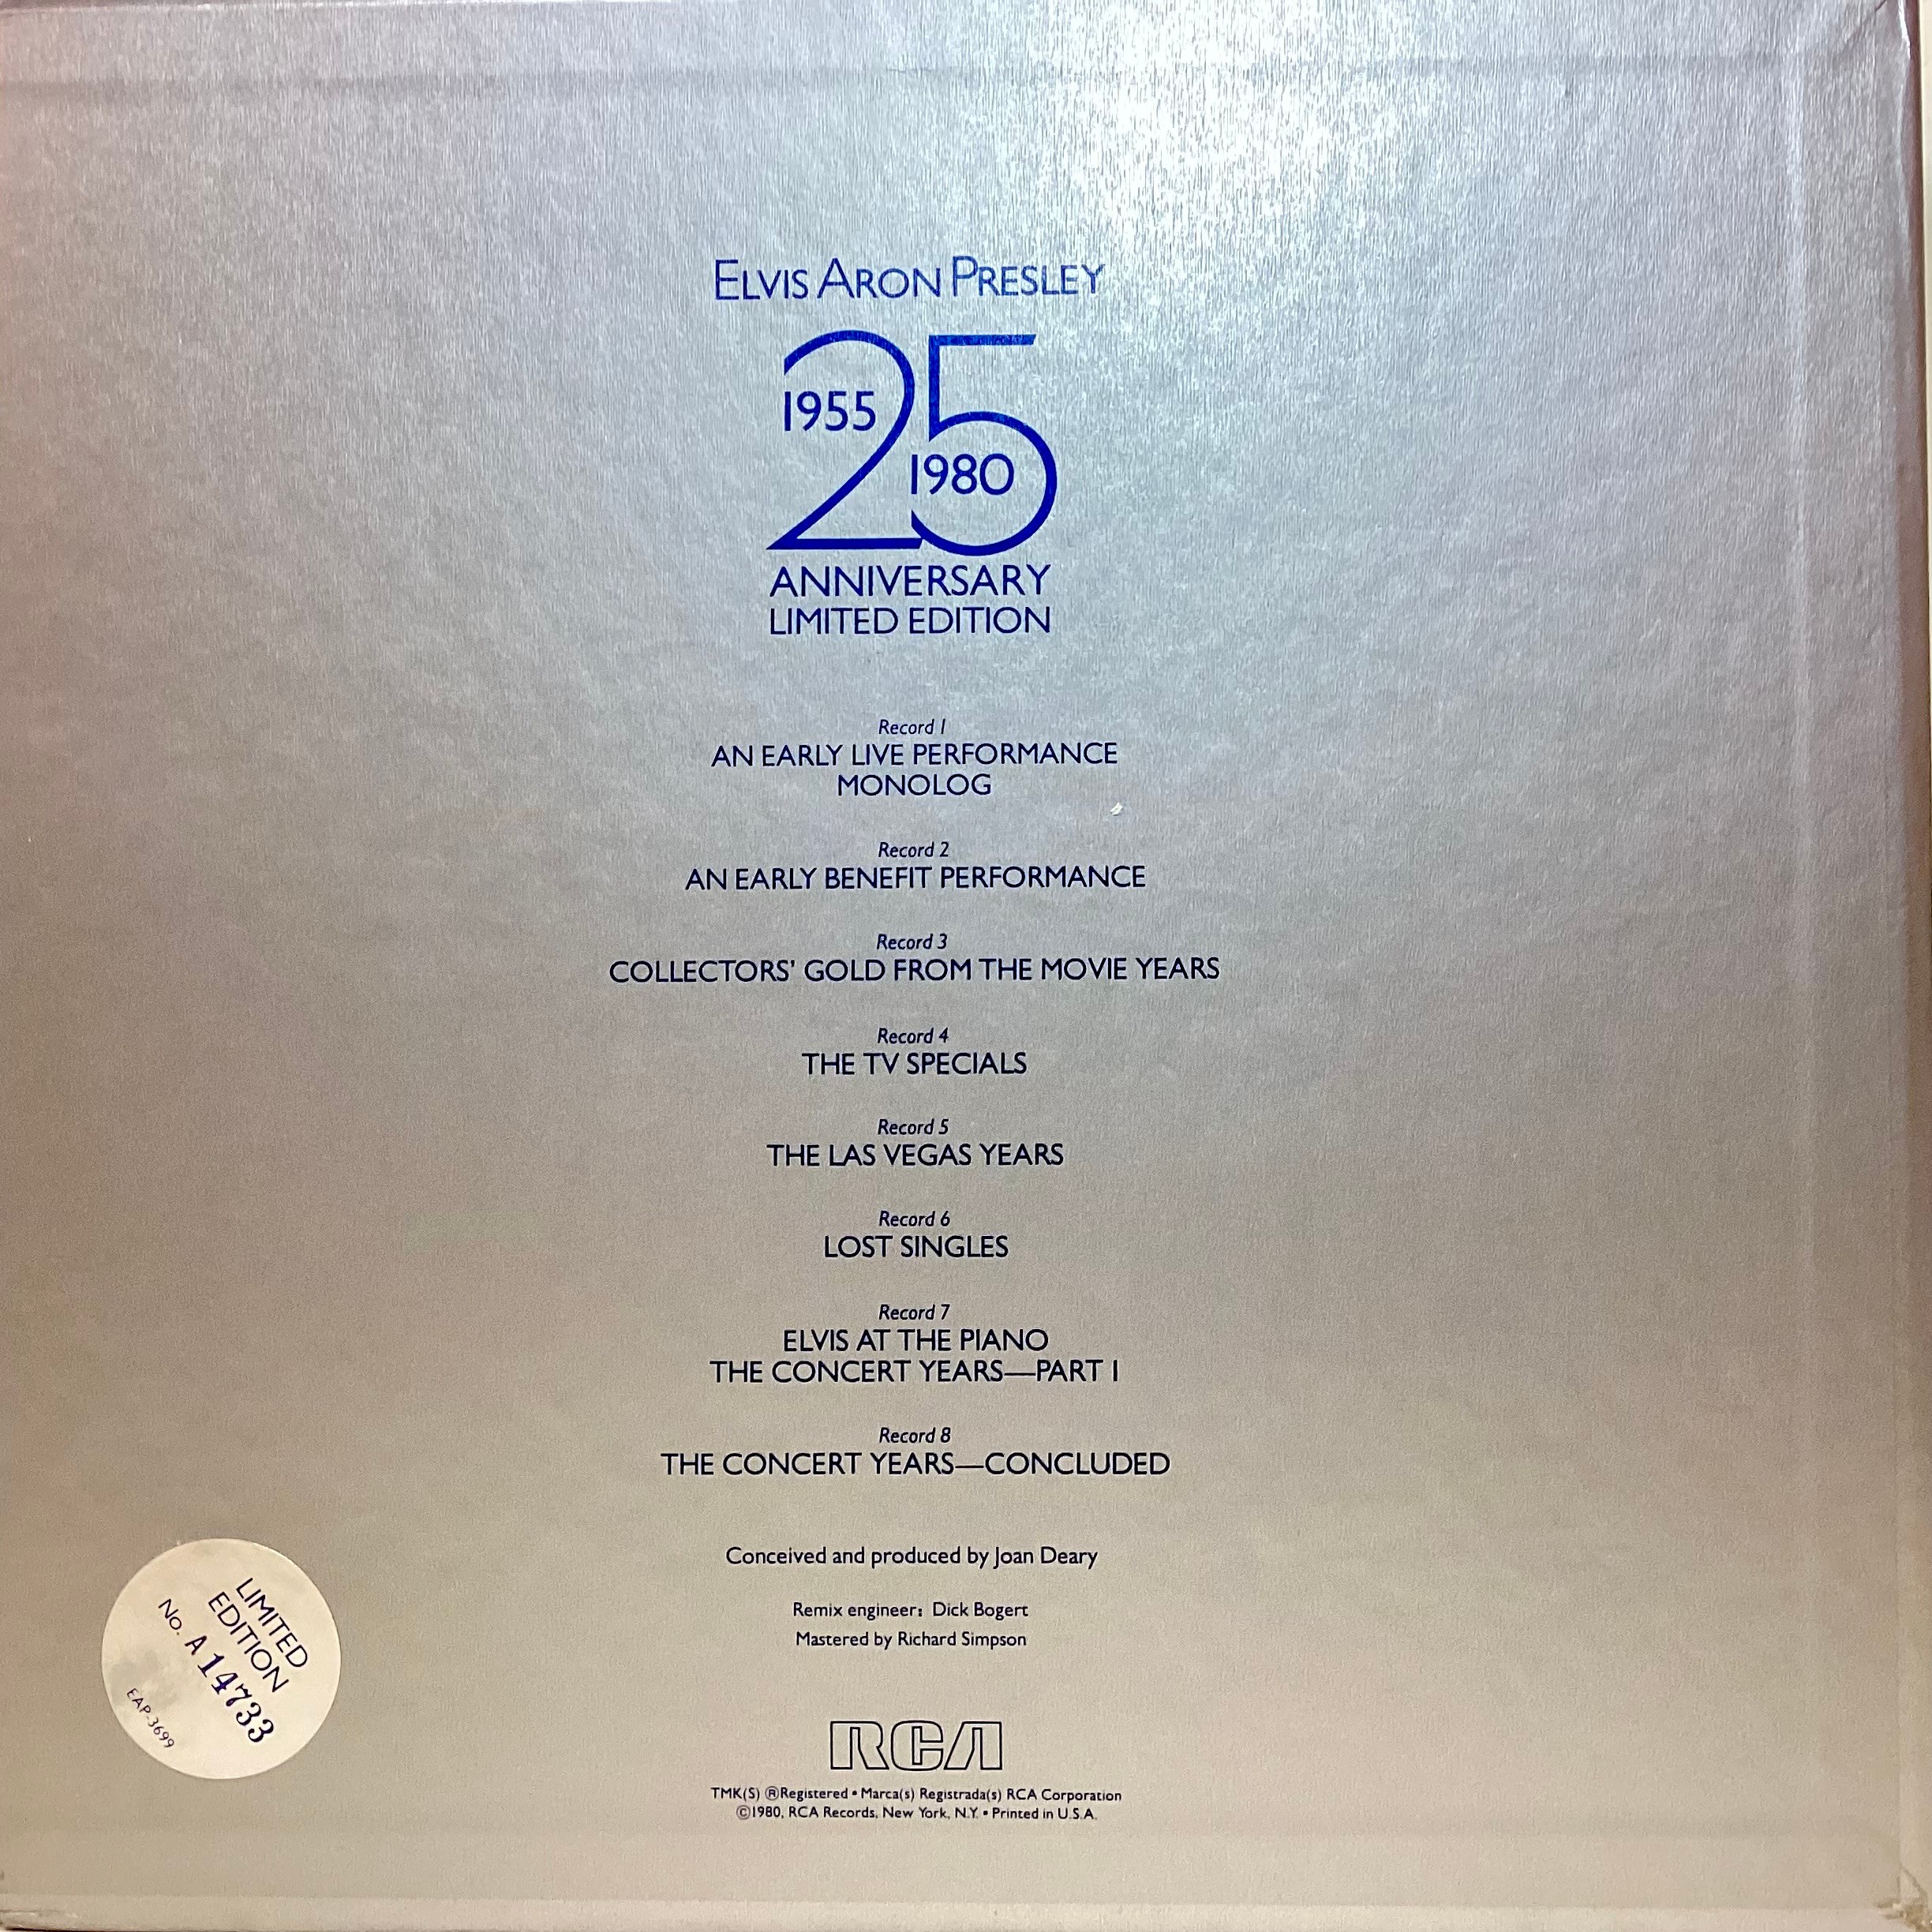 ELVIS ARON PRESLEY 1955/1980 25 ANNIVERSARY 8 LP BOX SET. Super limited edition set of 8 albums - Image 2 of 9